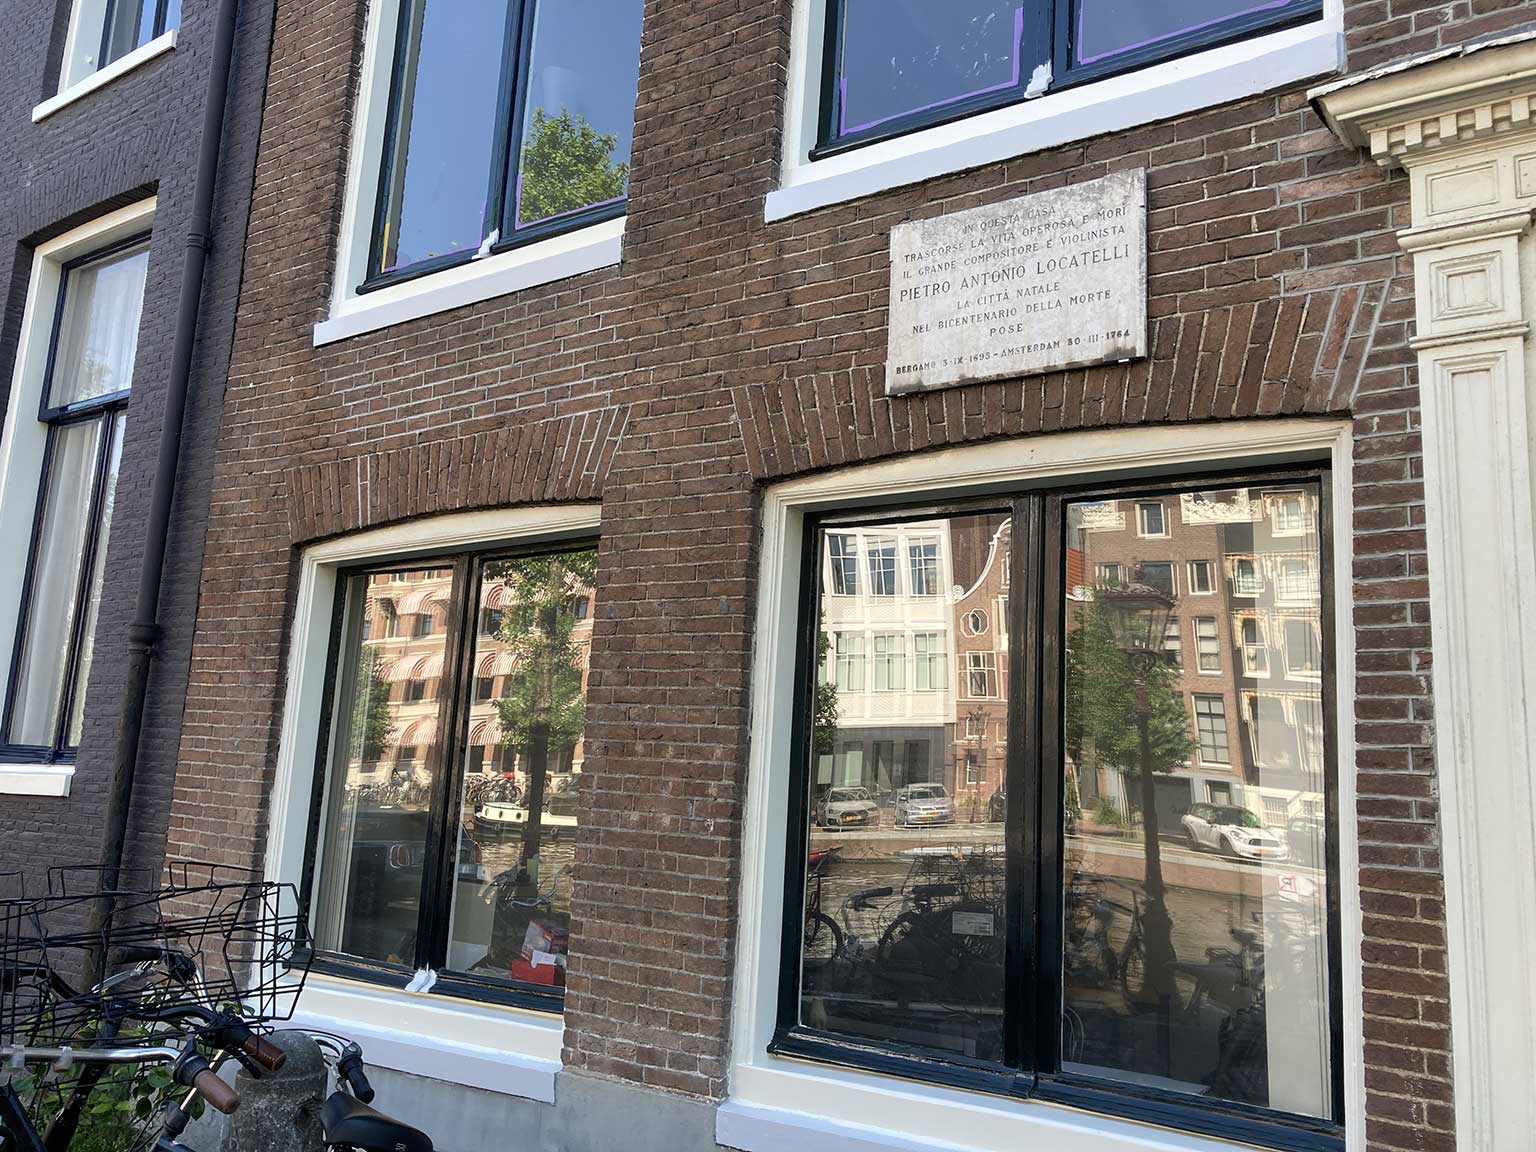 Detail van Locatelli's huis op de Prinsengracht 506, Amsterdam